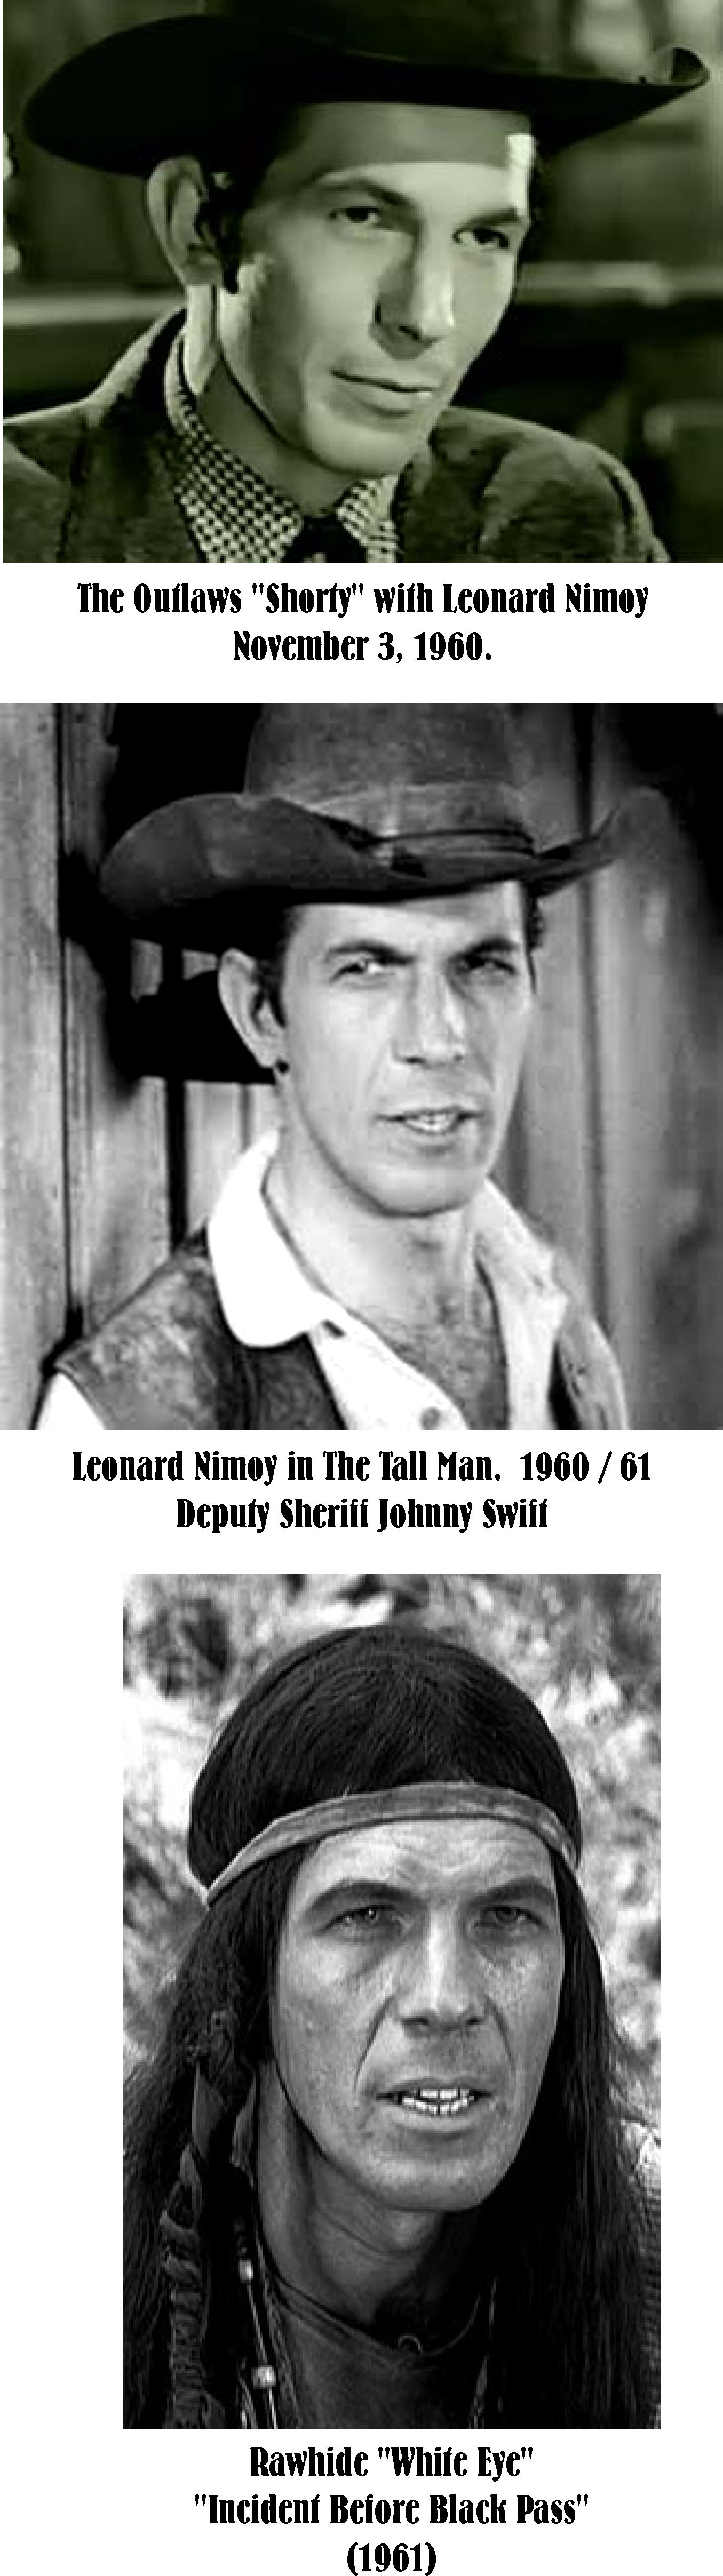 Leonard Nimoy tv westerns